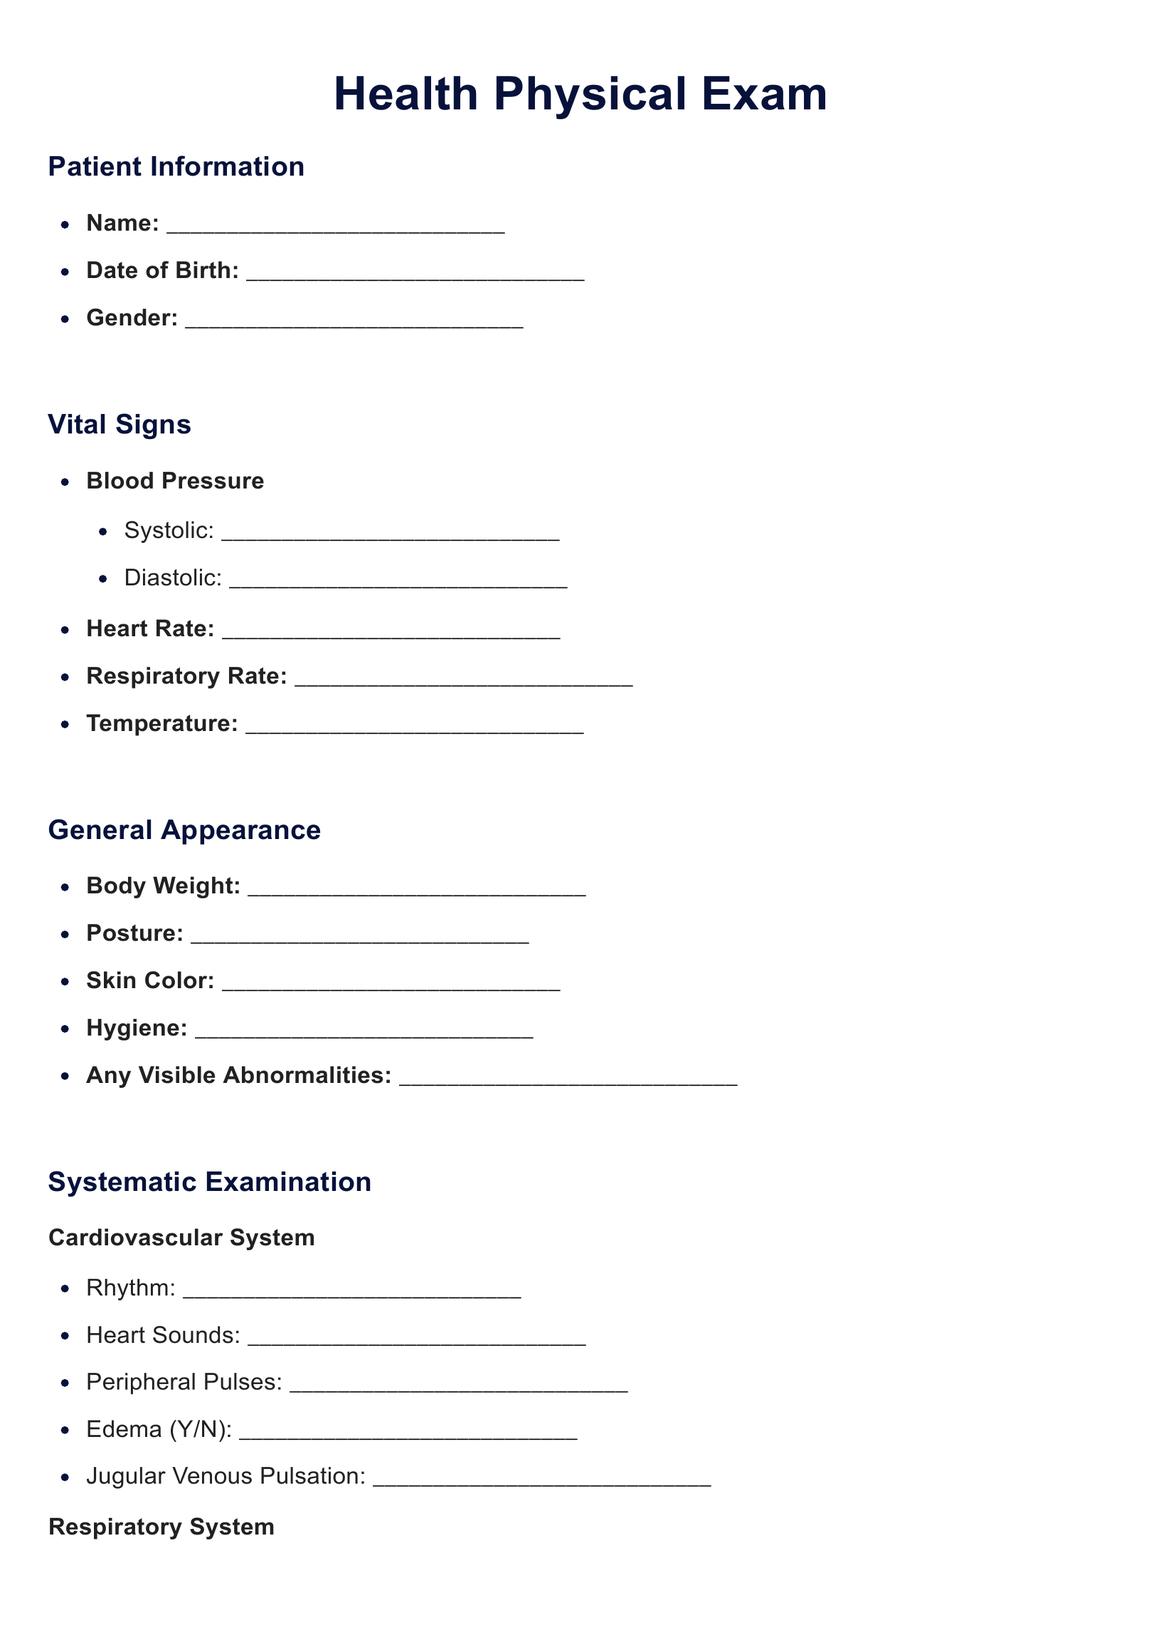 Health Physical Exam PDF Example